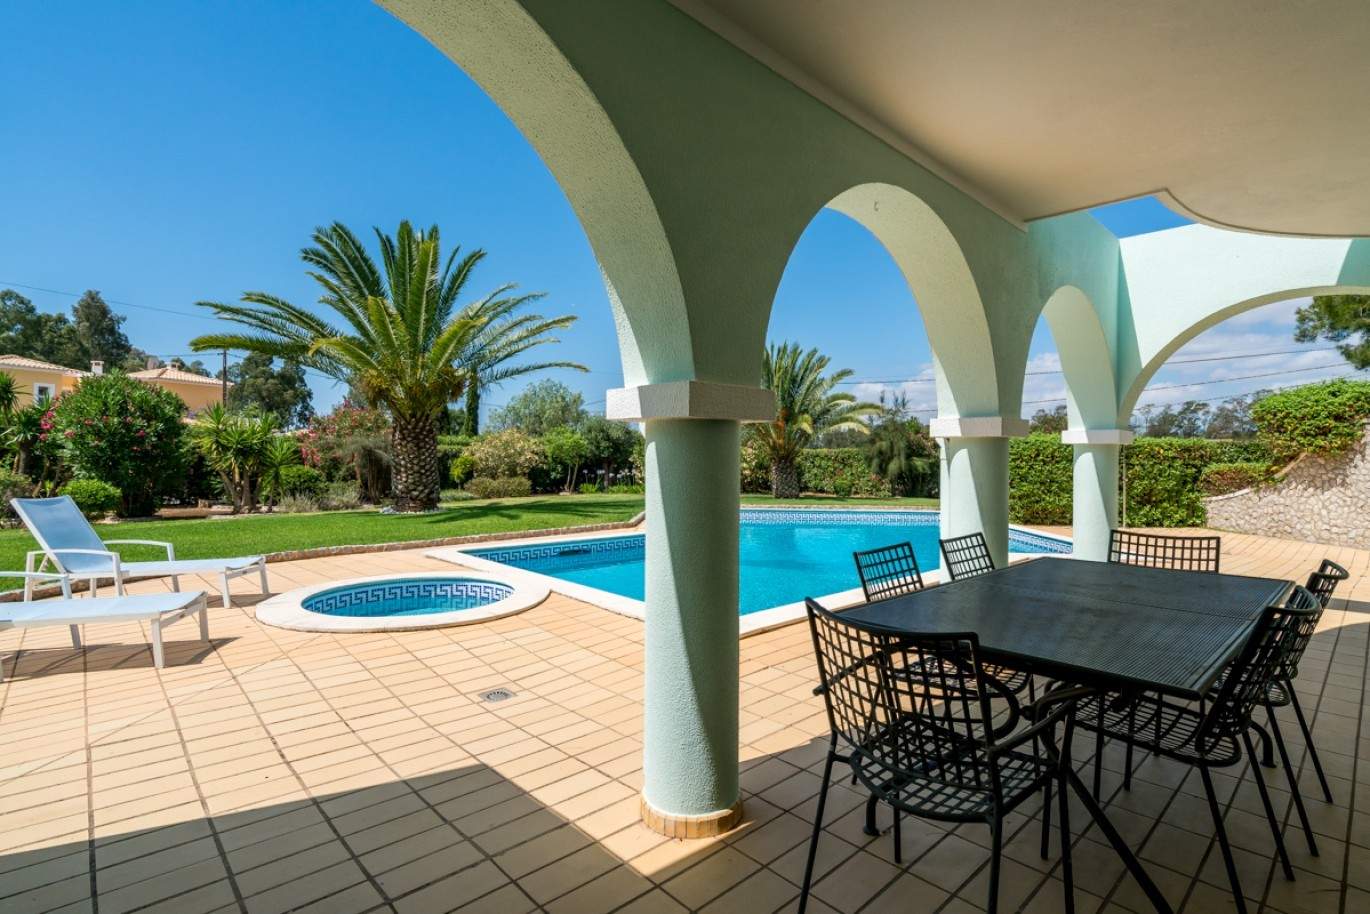 Venta de vivienda con piscina en la Penina, Alvor, Algarve, Portugal_83413